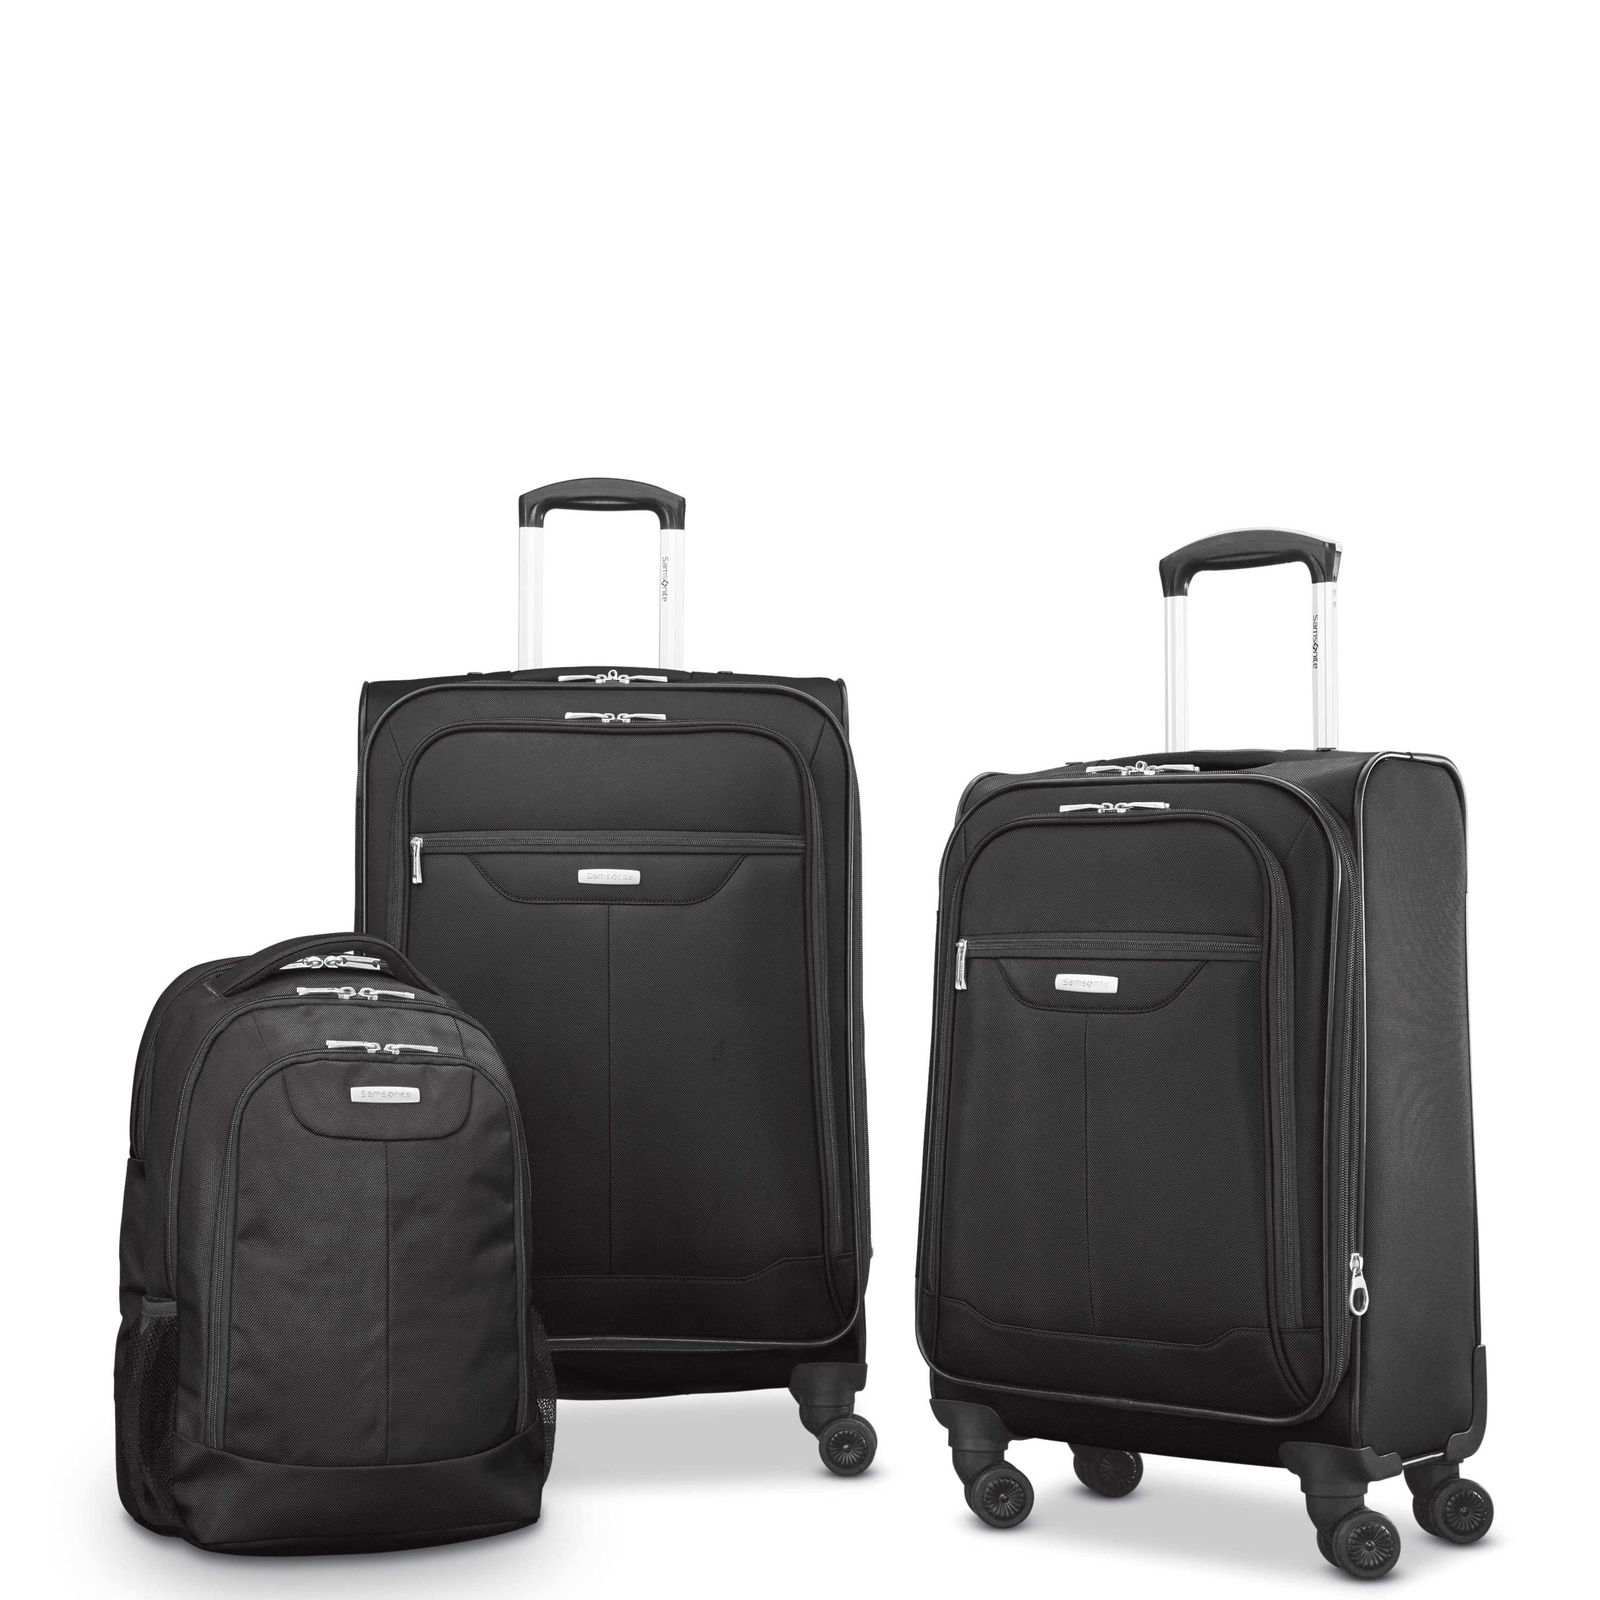 Samsonite Tenacity 3-piece luggage set for $80, free shipping | Clark Deals